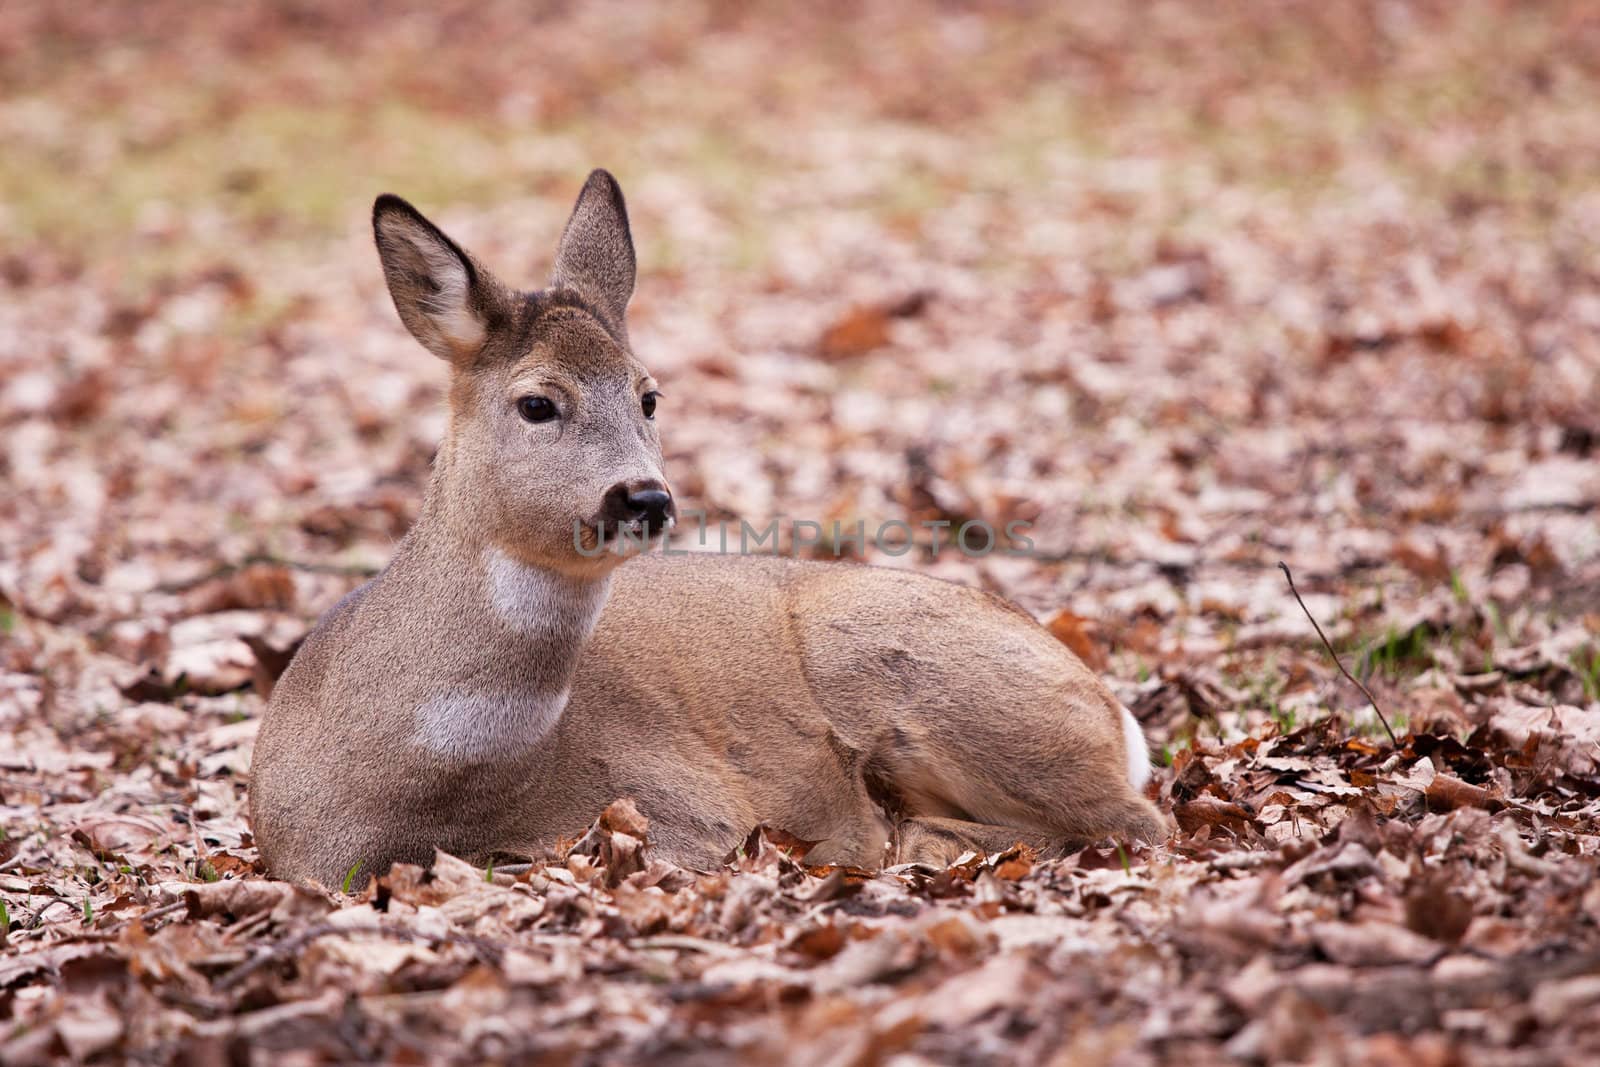 A deer in the Warsaw park by seawhisper